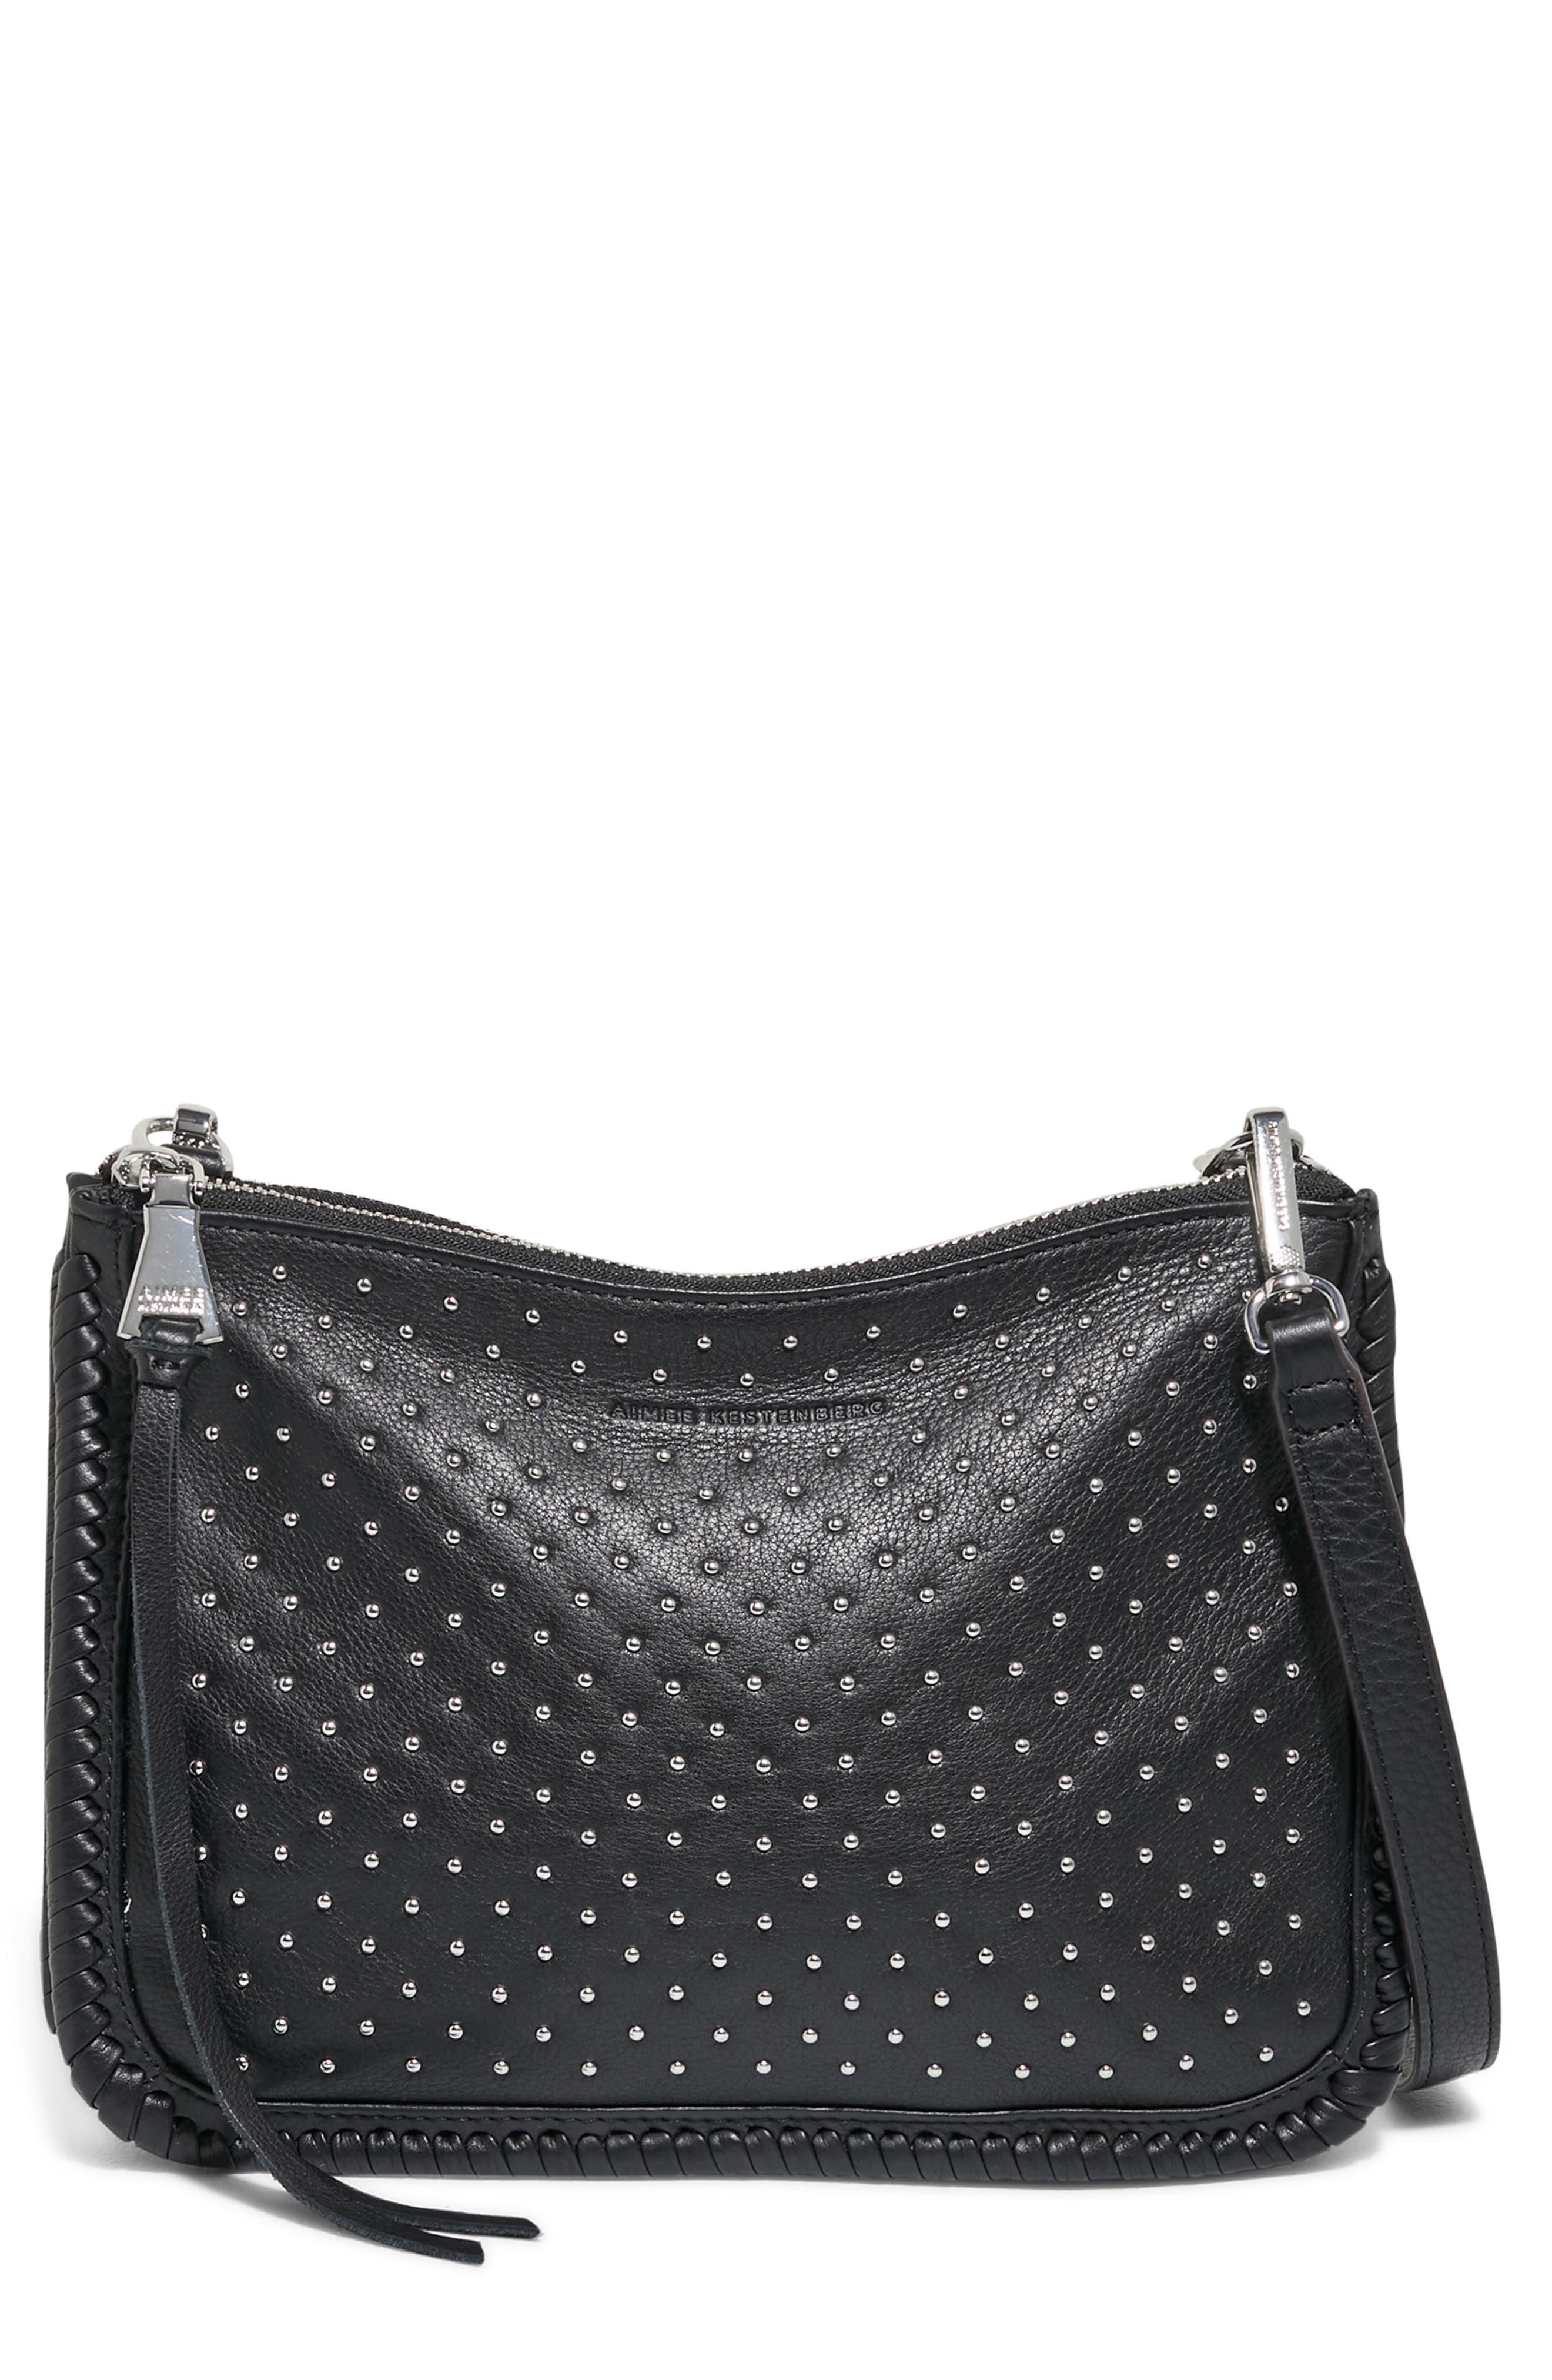 Aimee Kestenberg Famous Double Zip Leather Crossbody Bag in Gray | Lyst